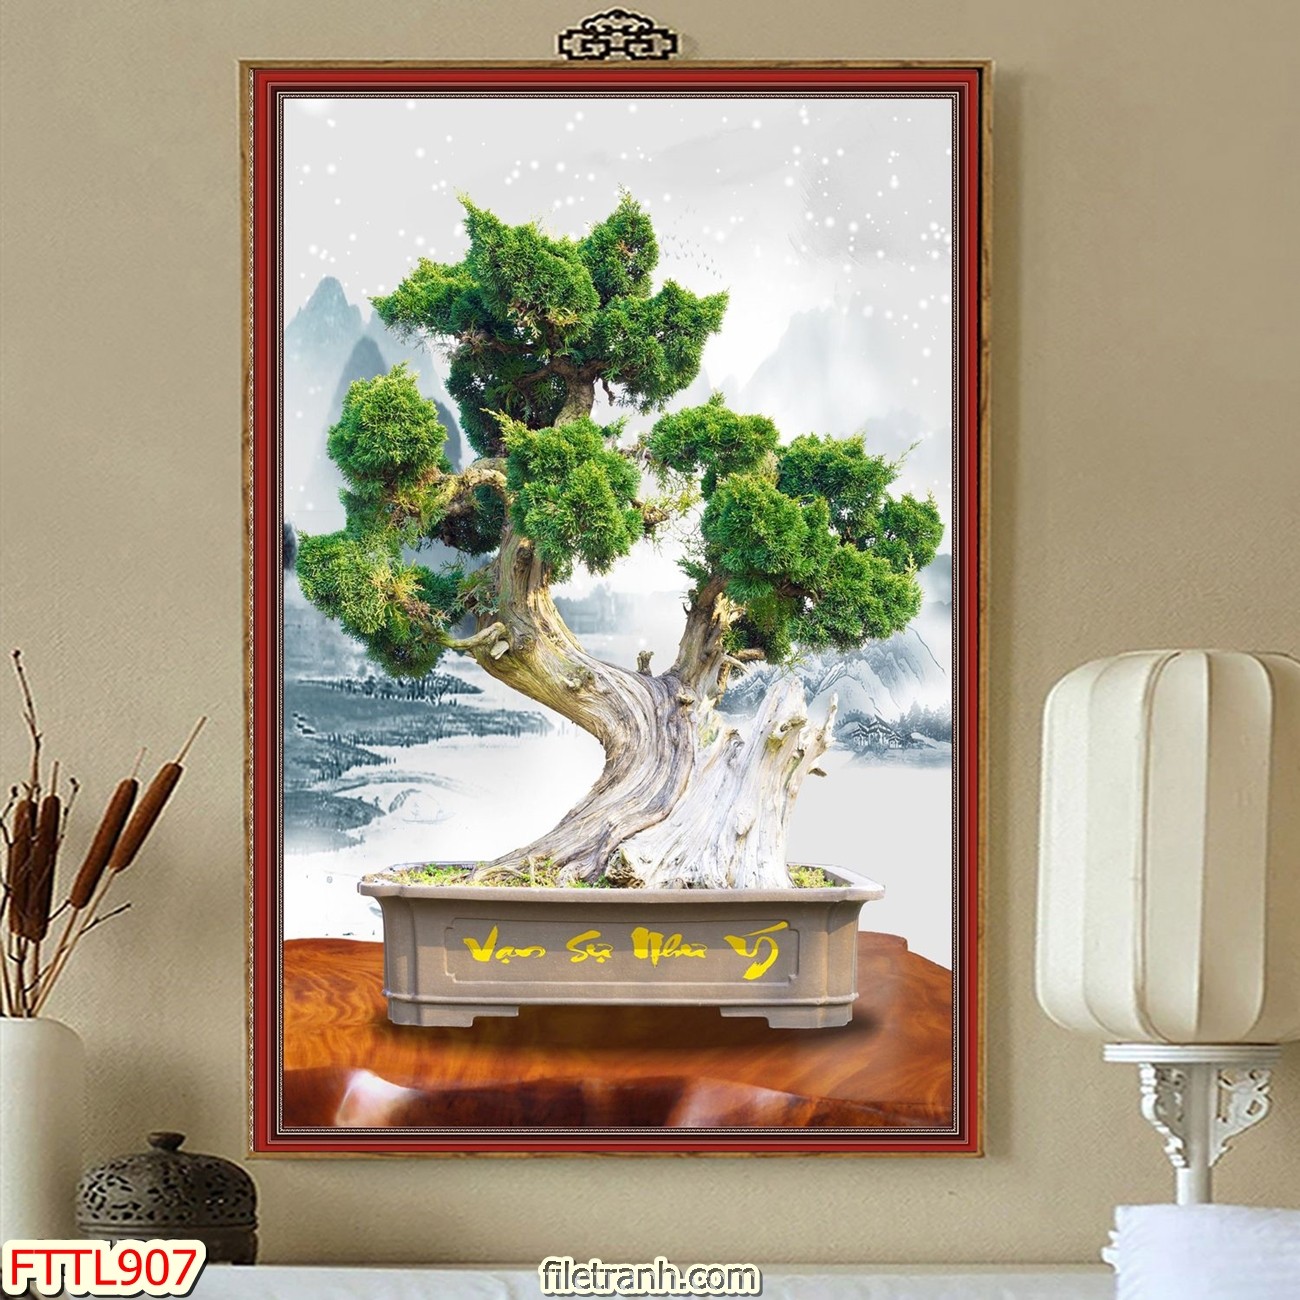 http://filetranh.com/file-tranh-chau-mai-bonsai/file-tranh-chau-mai-bonsai-fttl907.html